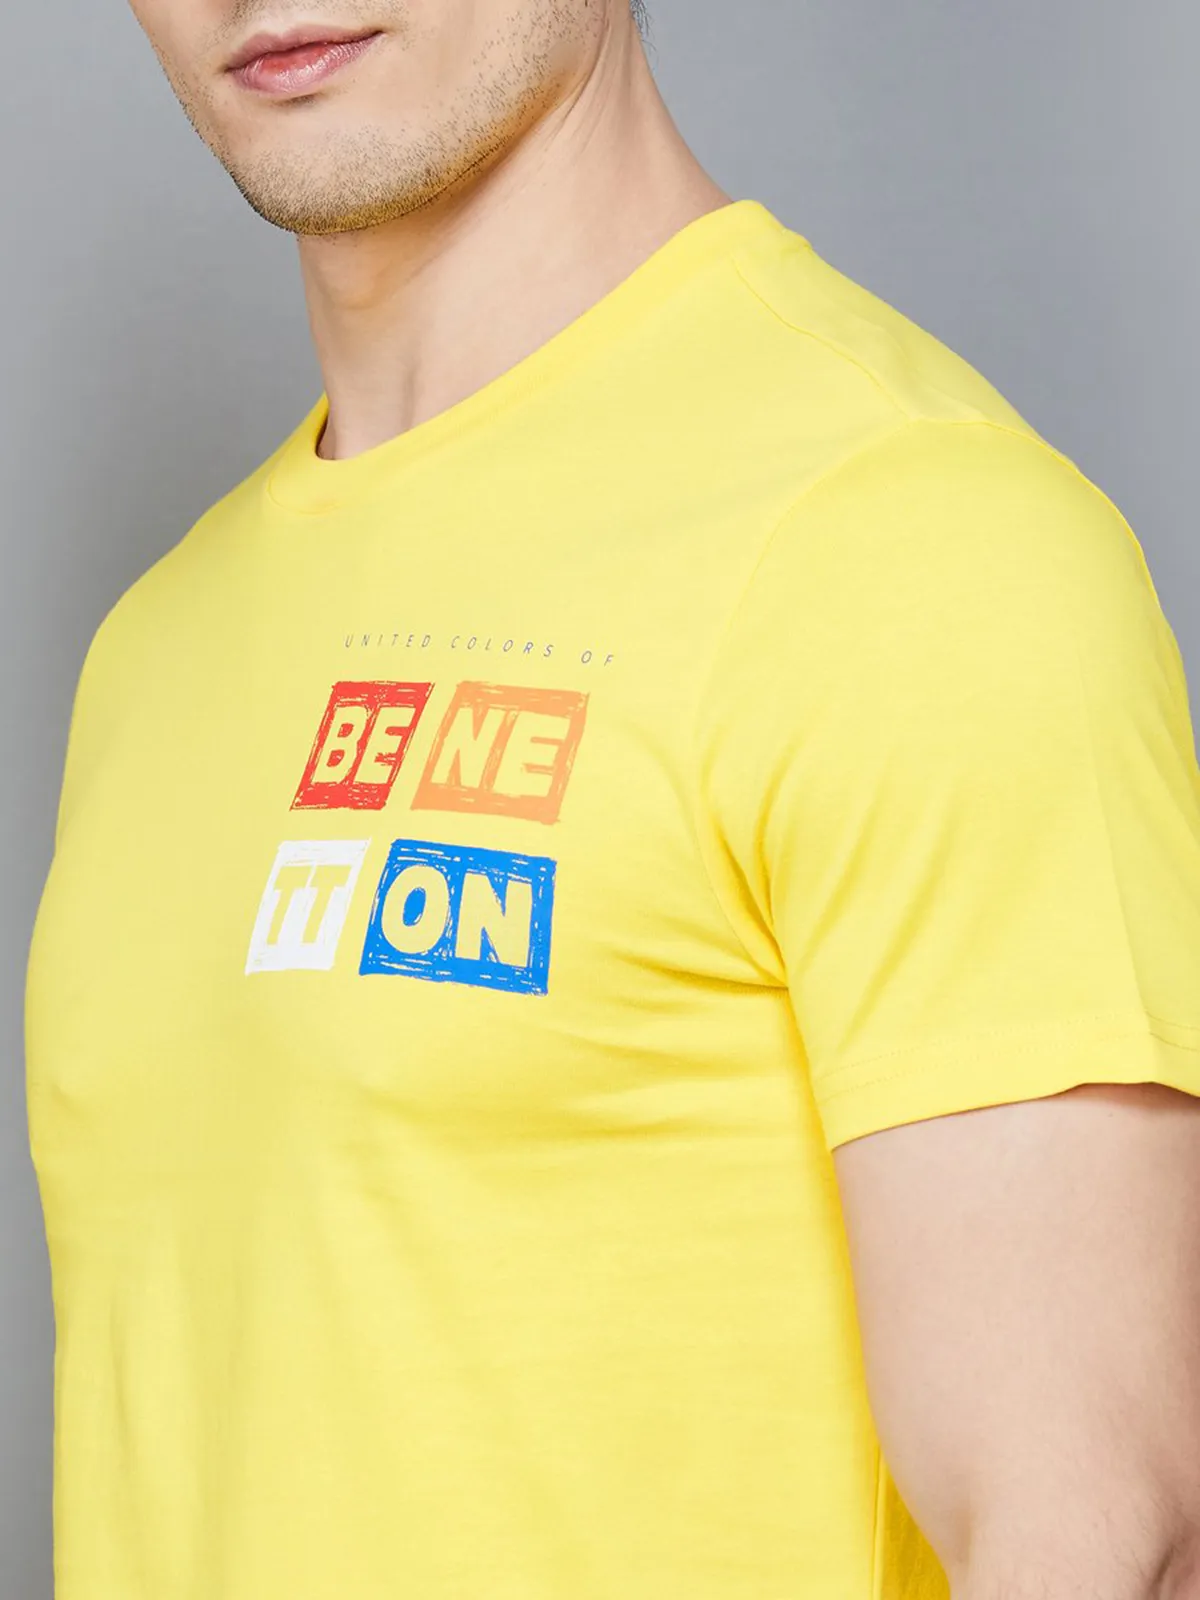 UCB printed cotton yellow t-shirt